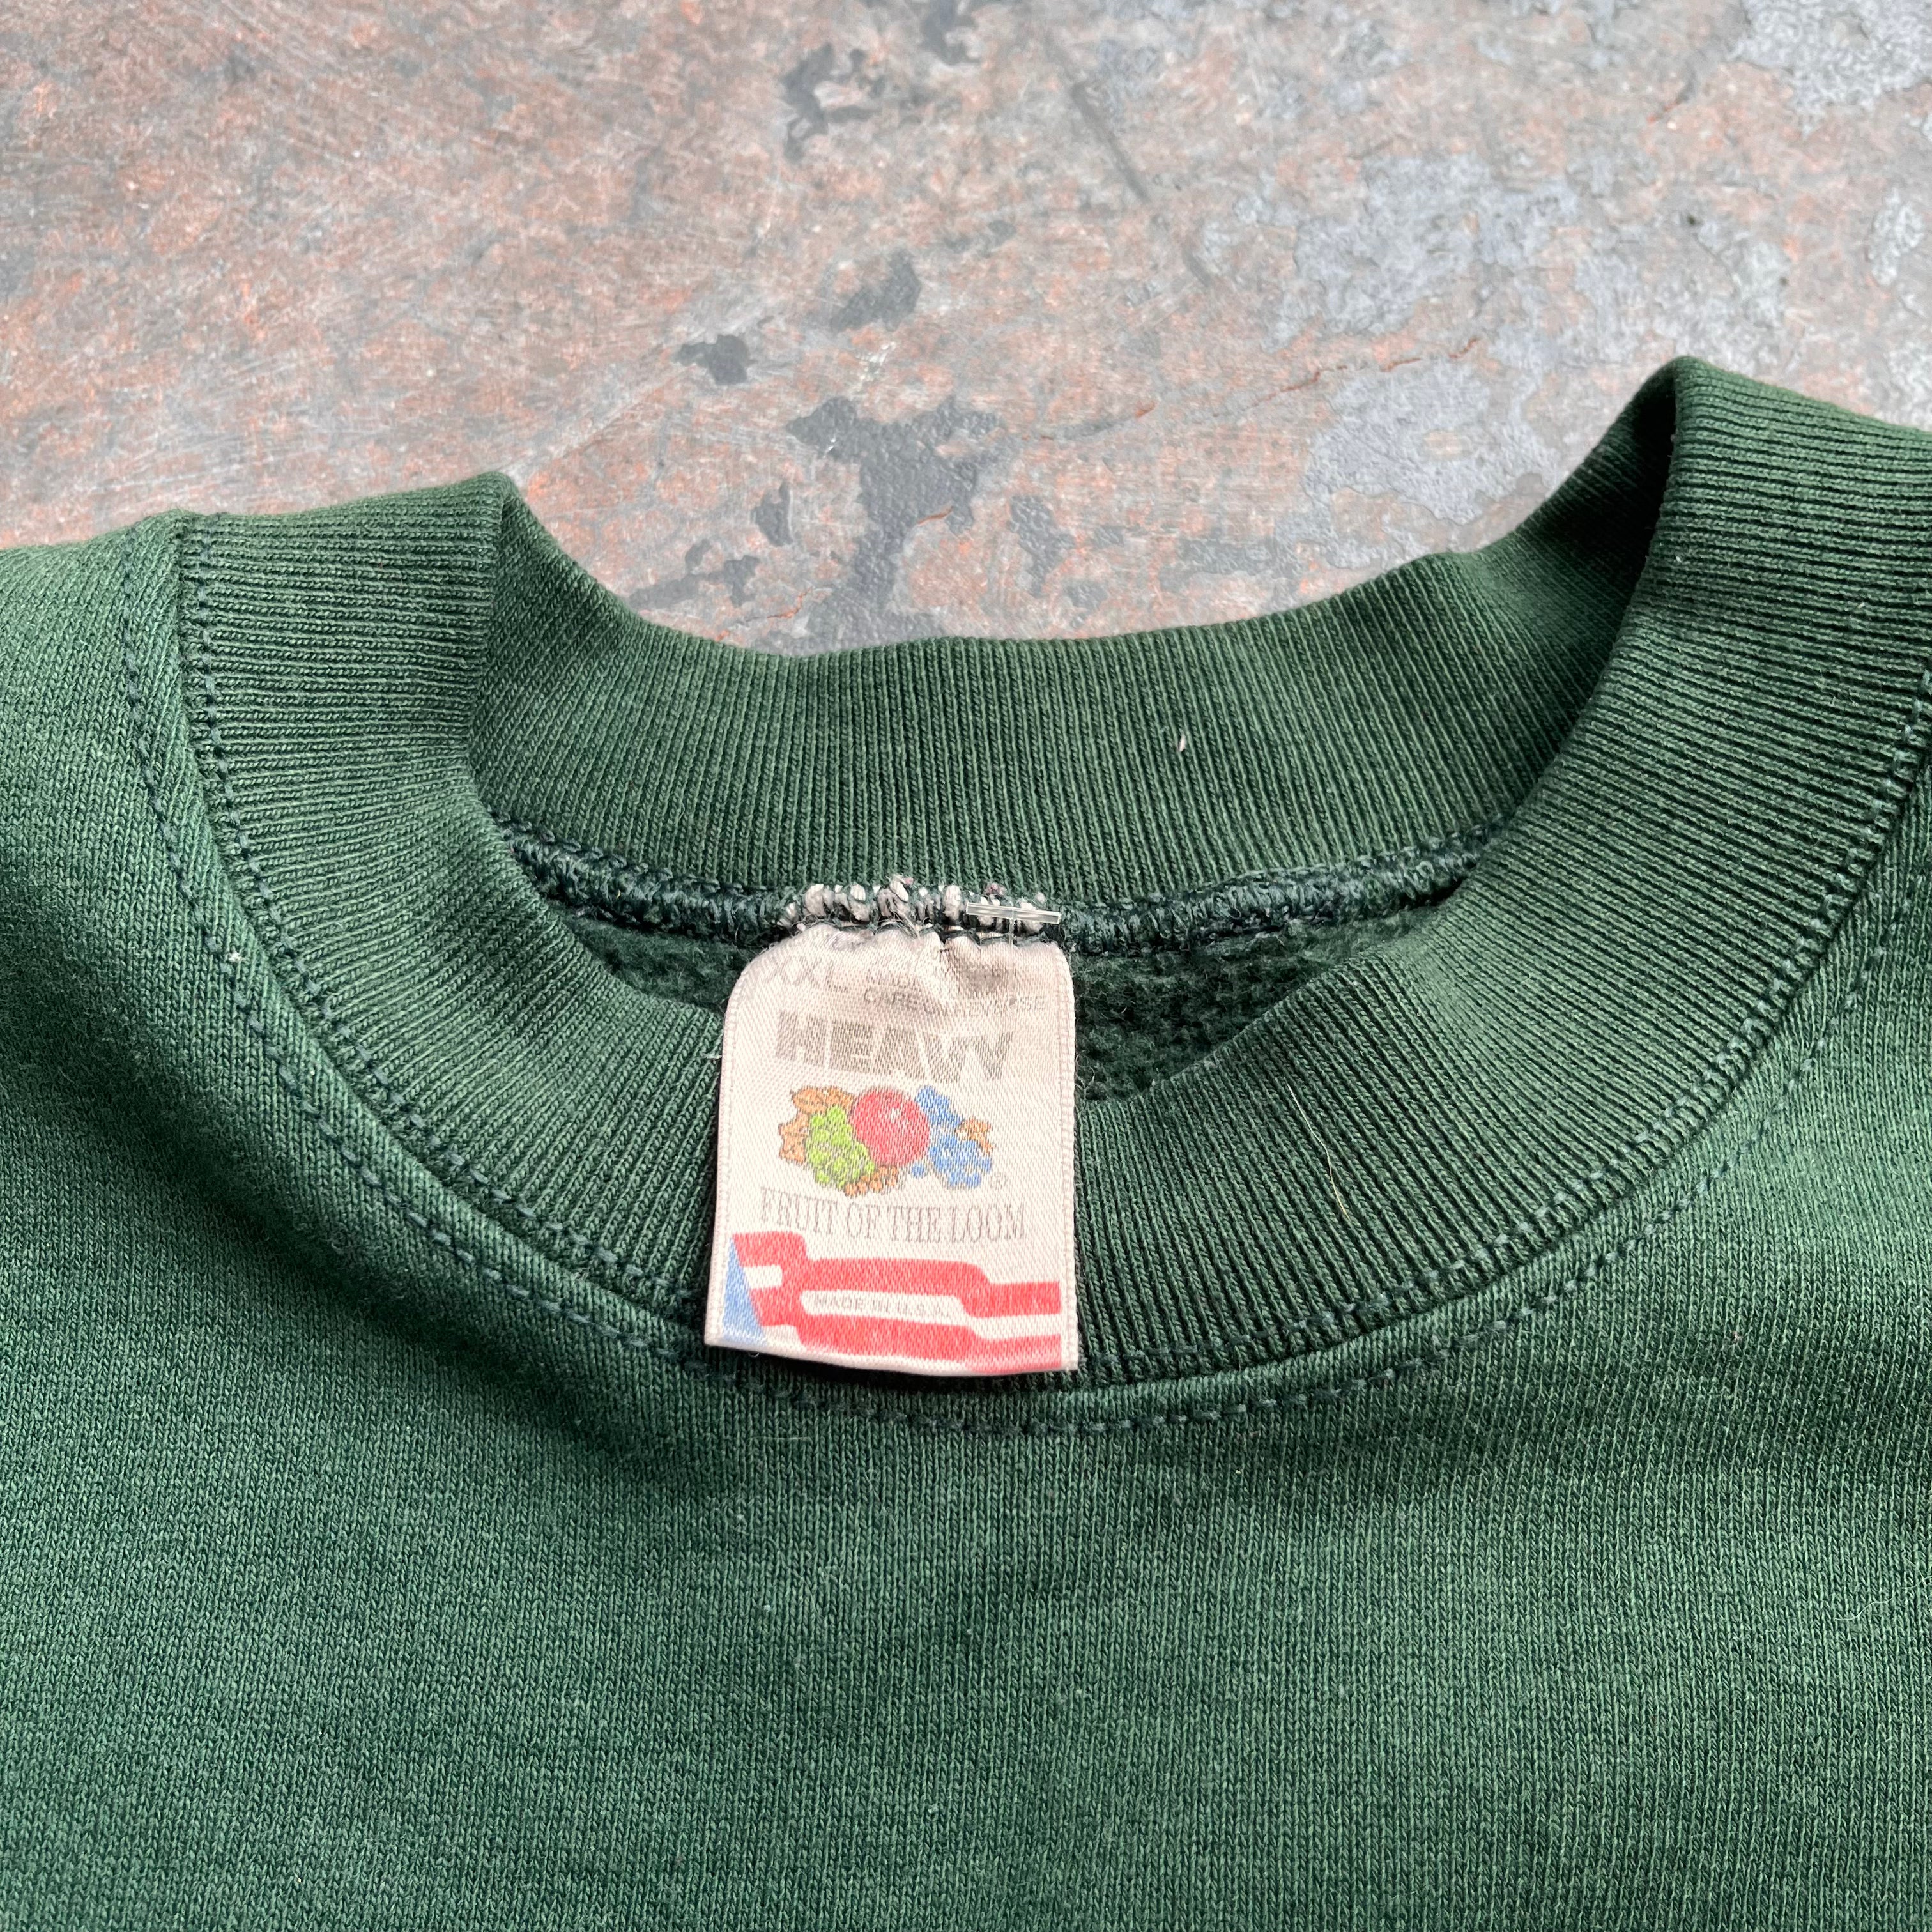 1997 Green Bay Packers Super Bowl Sweatshirt